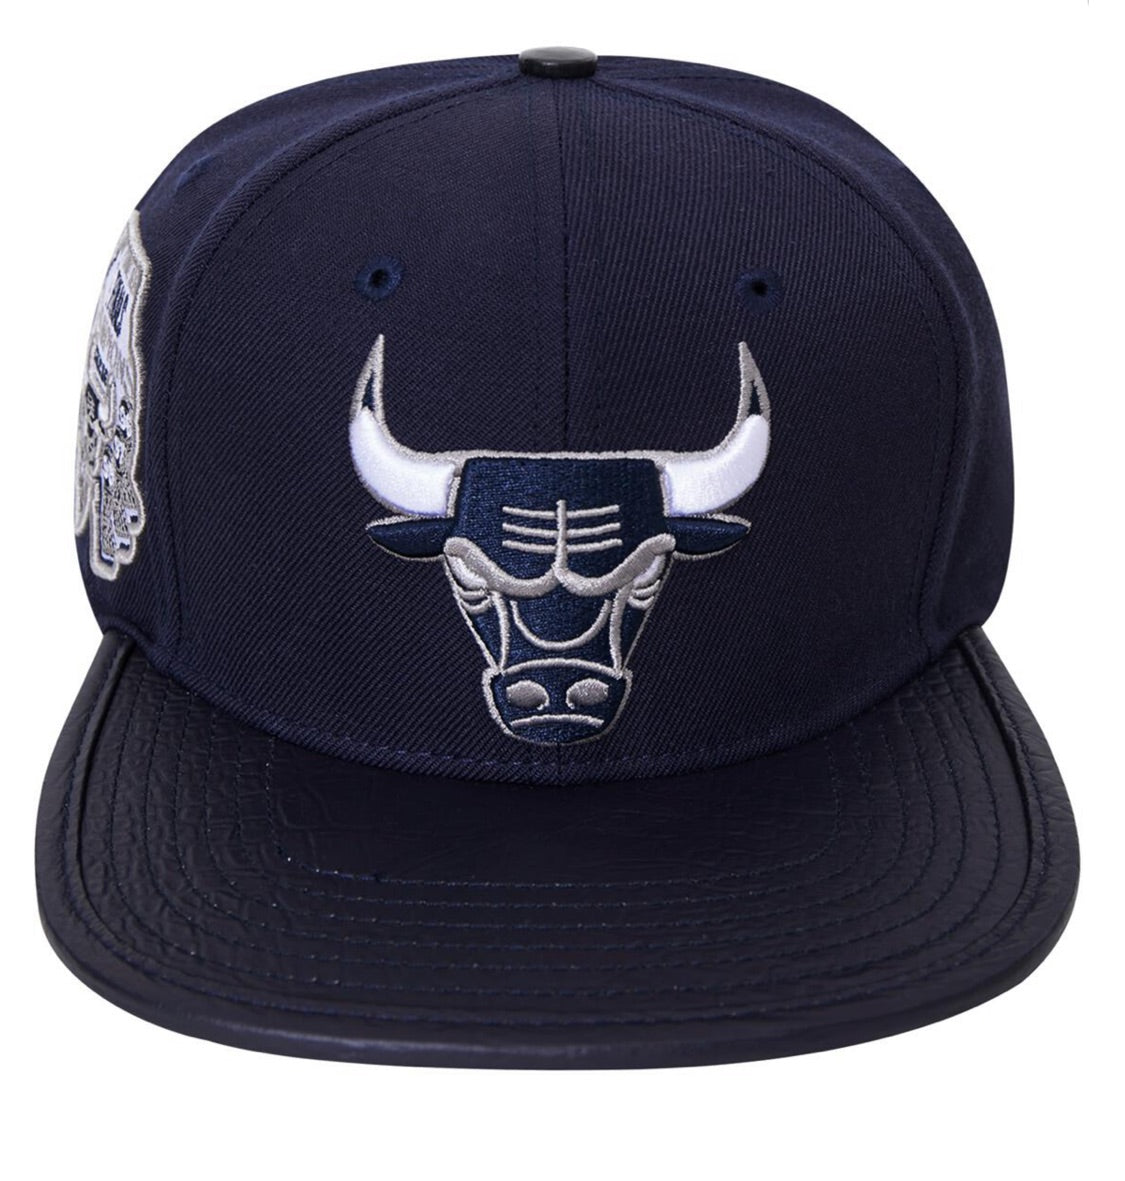 Pro Standard Gator Chicago Bulls Hat